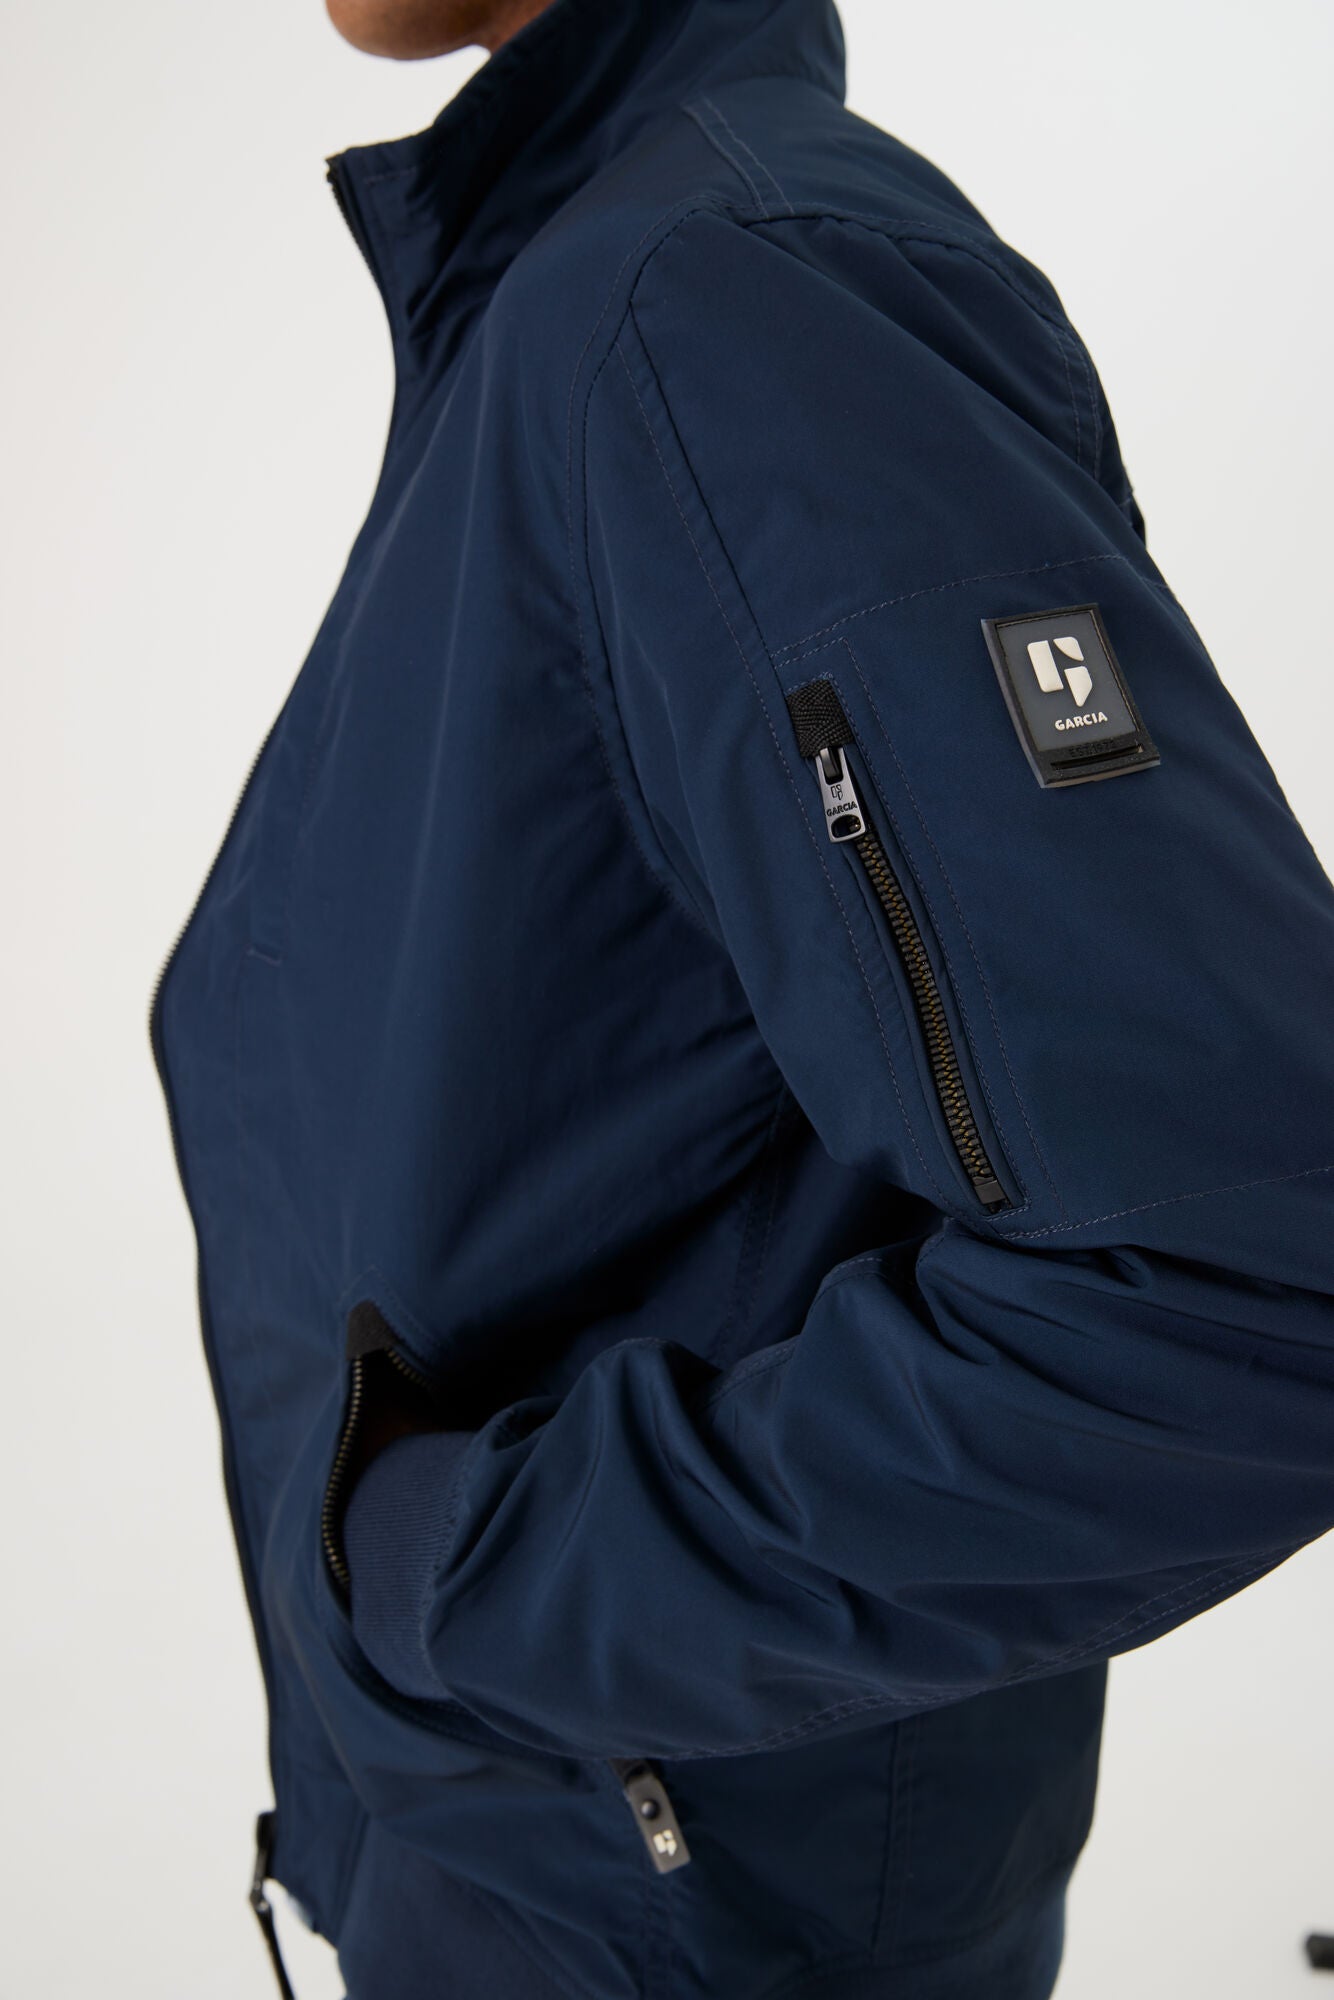 Harrington jacket GJ410204 Blue